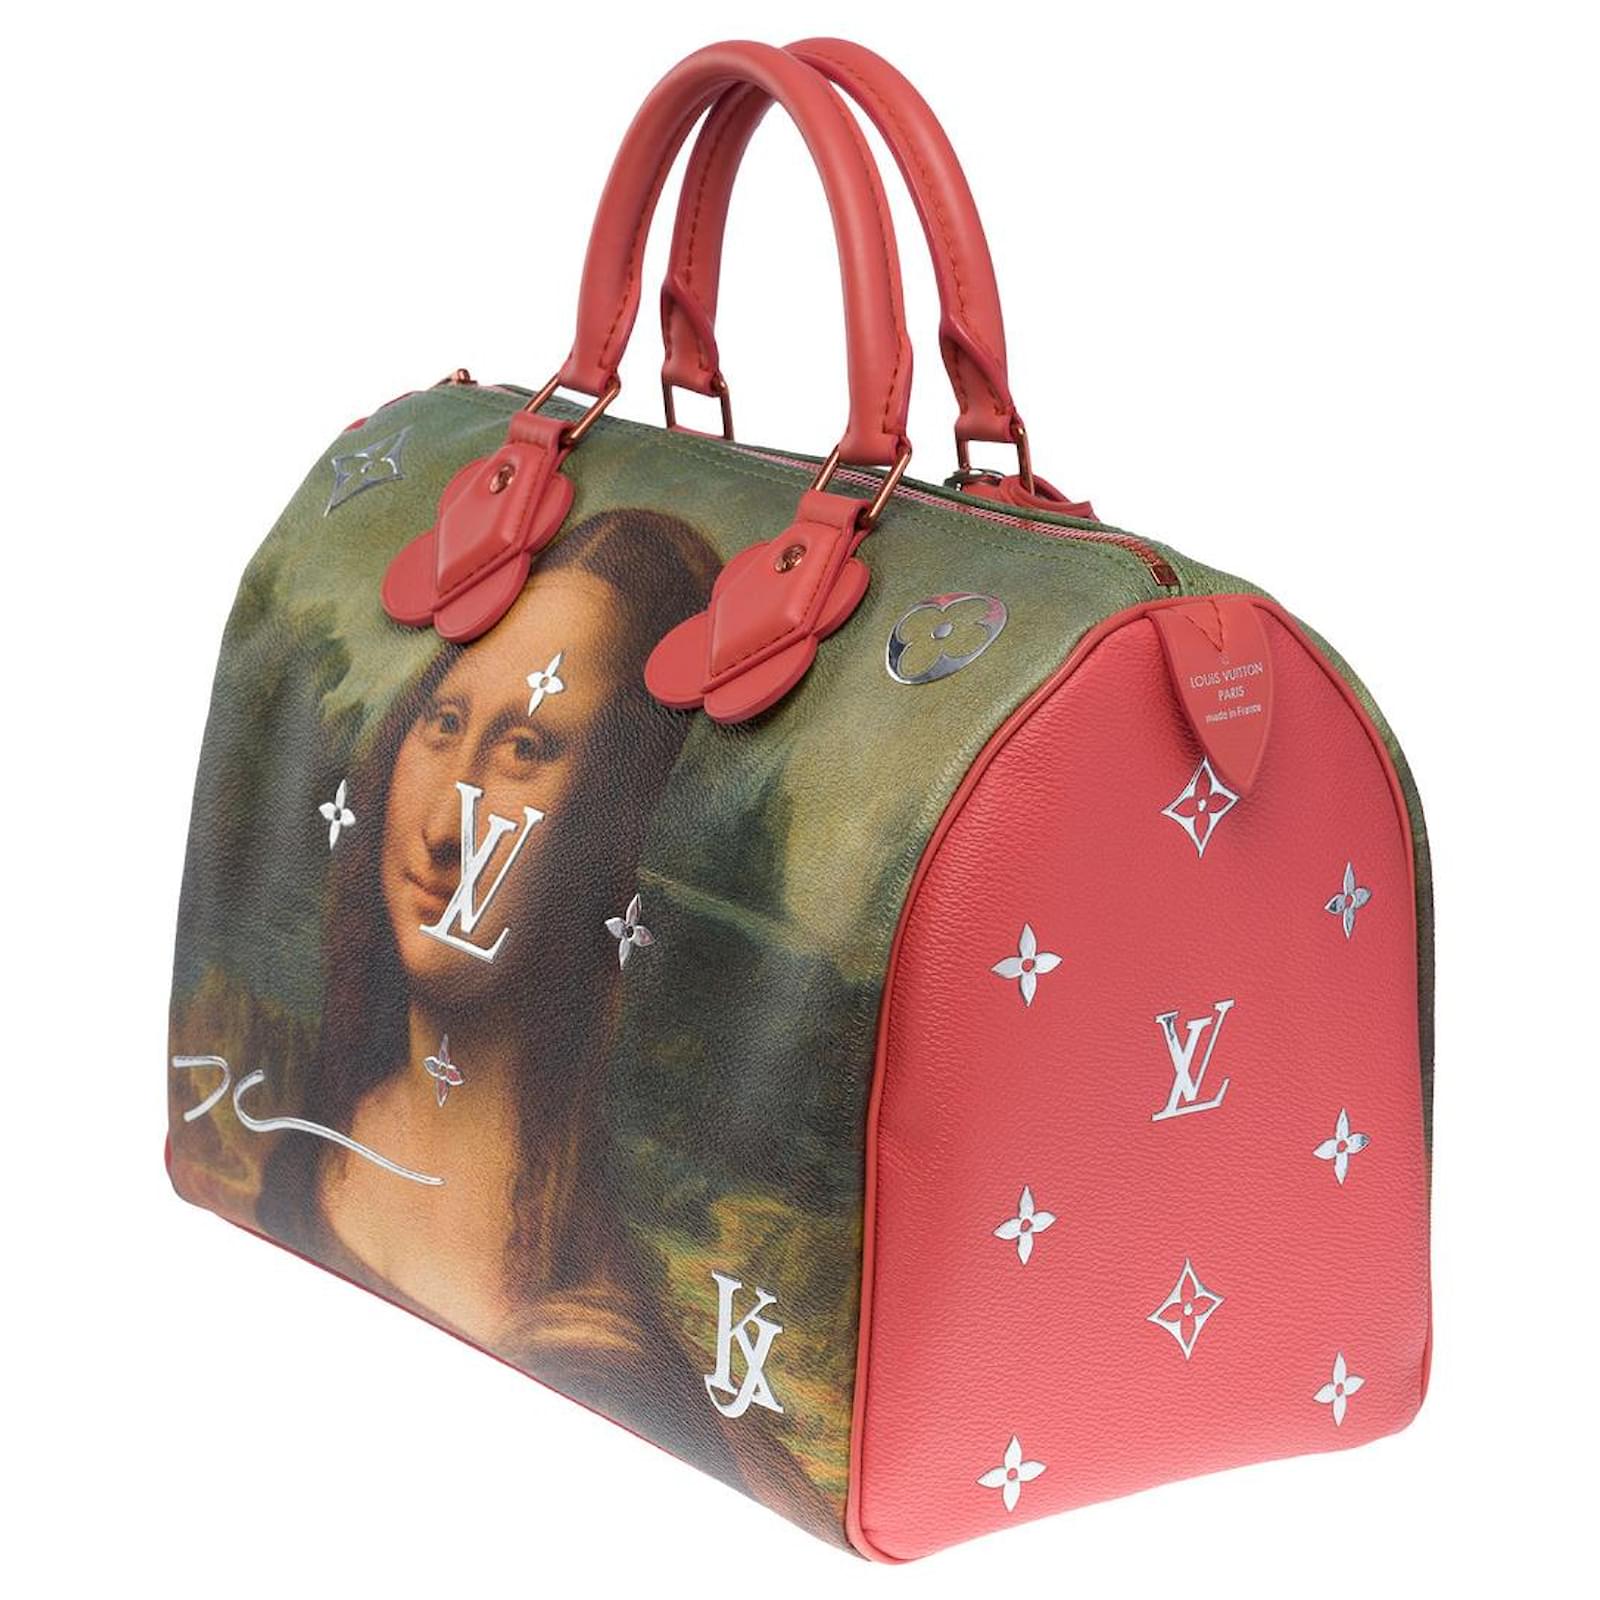 LOUIS VUITTON x Jeff Koons Speedy 30 DaVinci Mona Lisa Canvas Leather  Limited